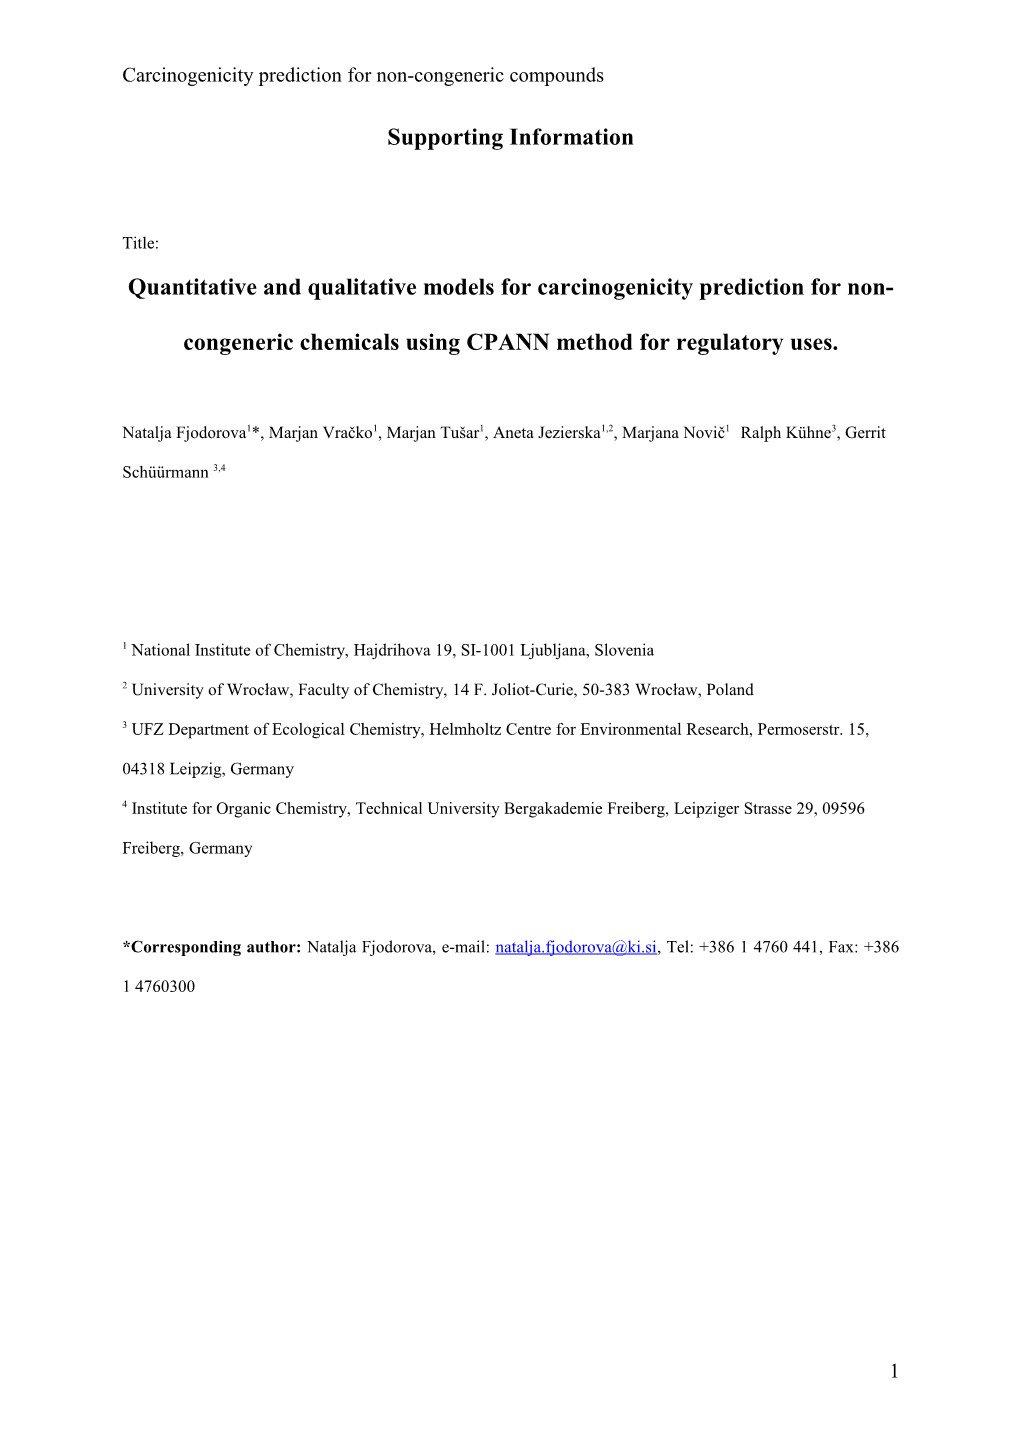 Qualitative and Quantitative Models for Carcinogenicity Prediction